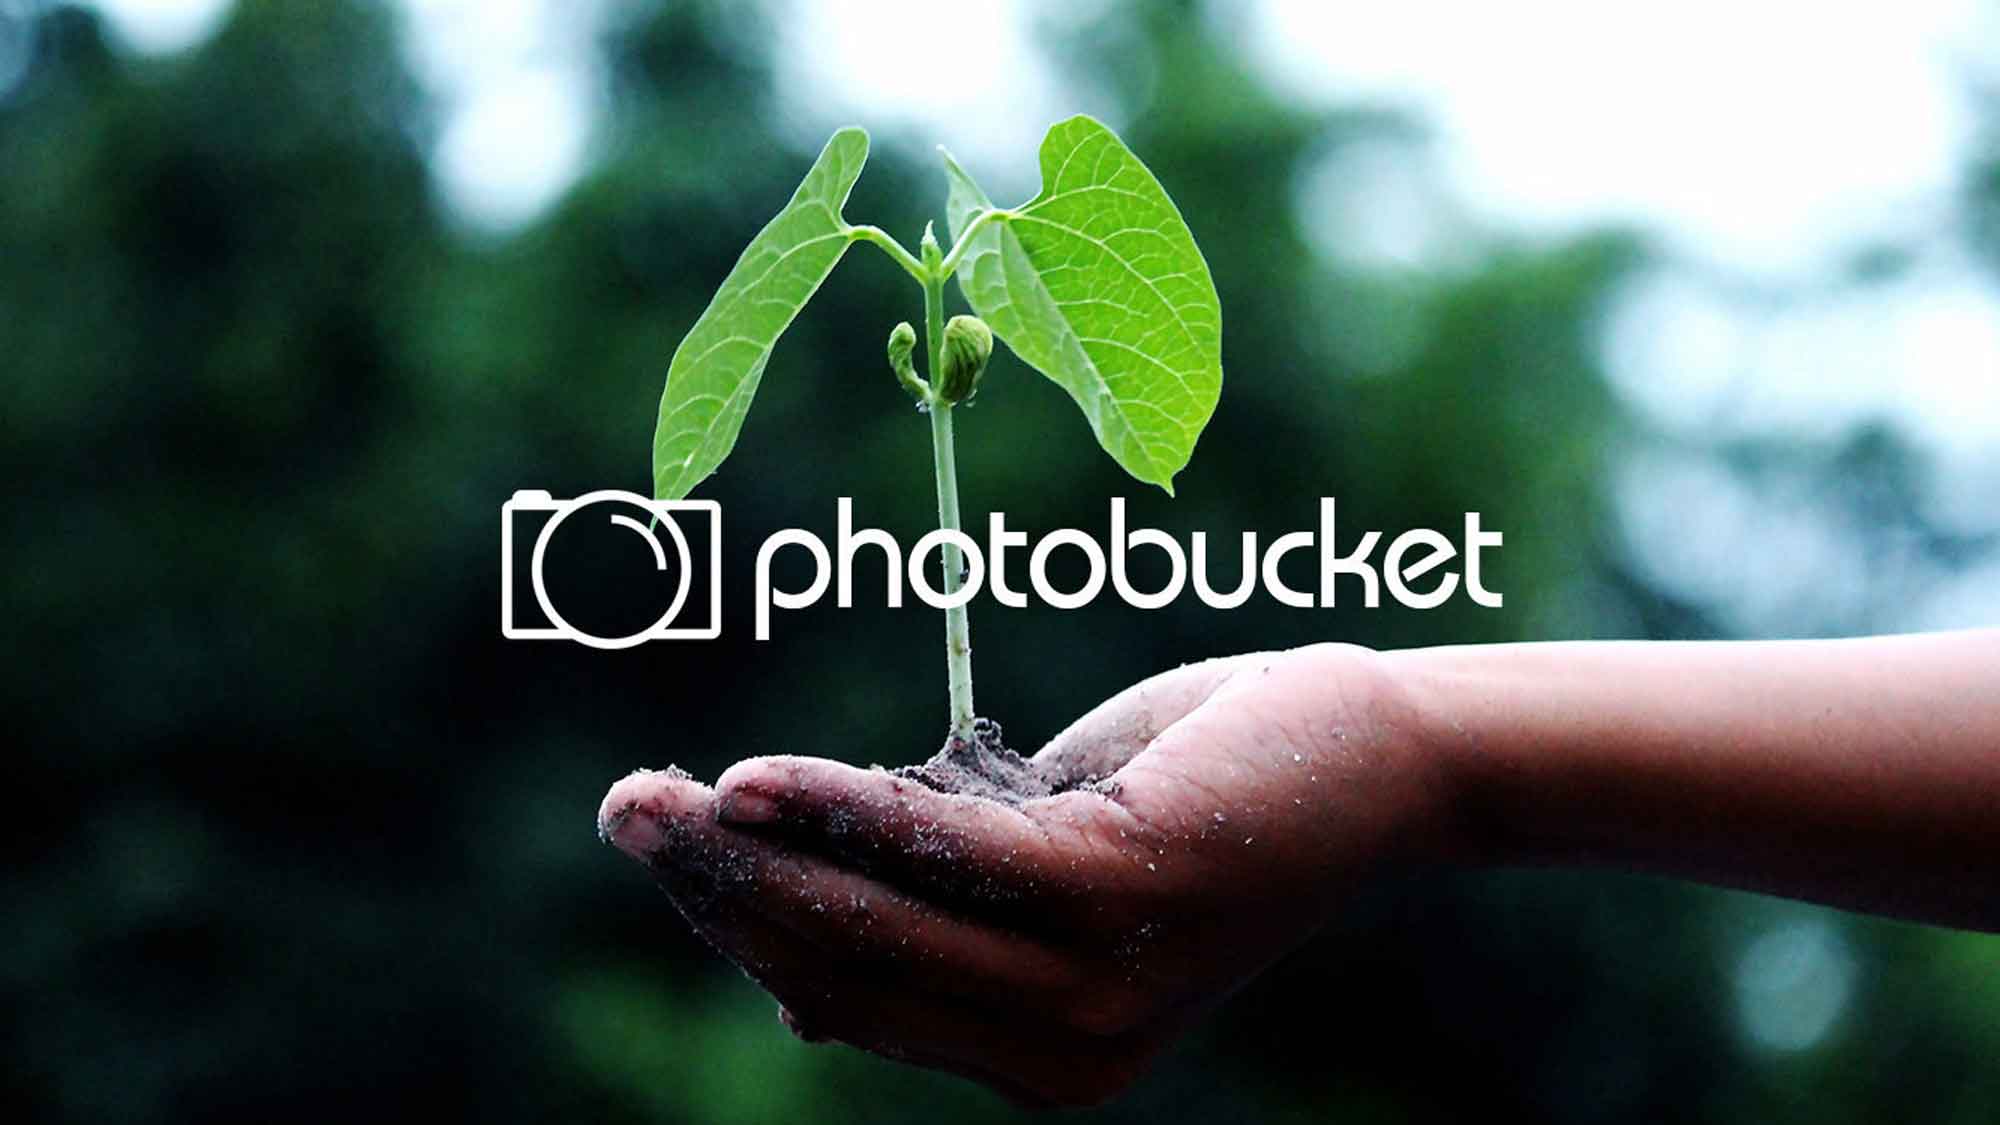 MySpace To Buy Photobucket For $250-300 Million (2007)